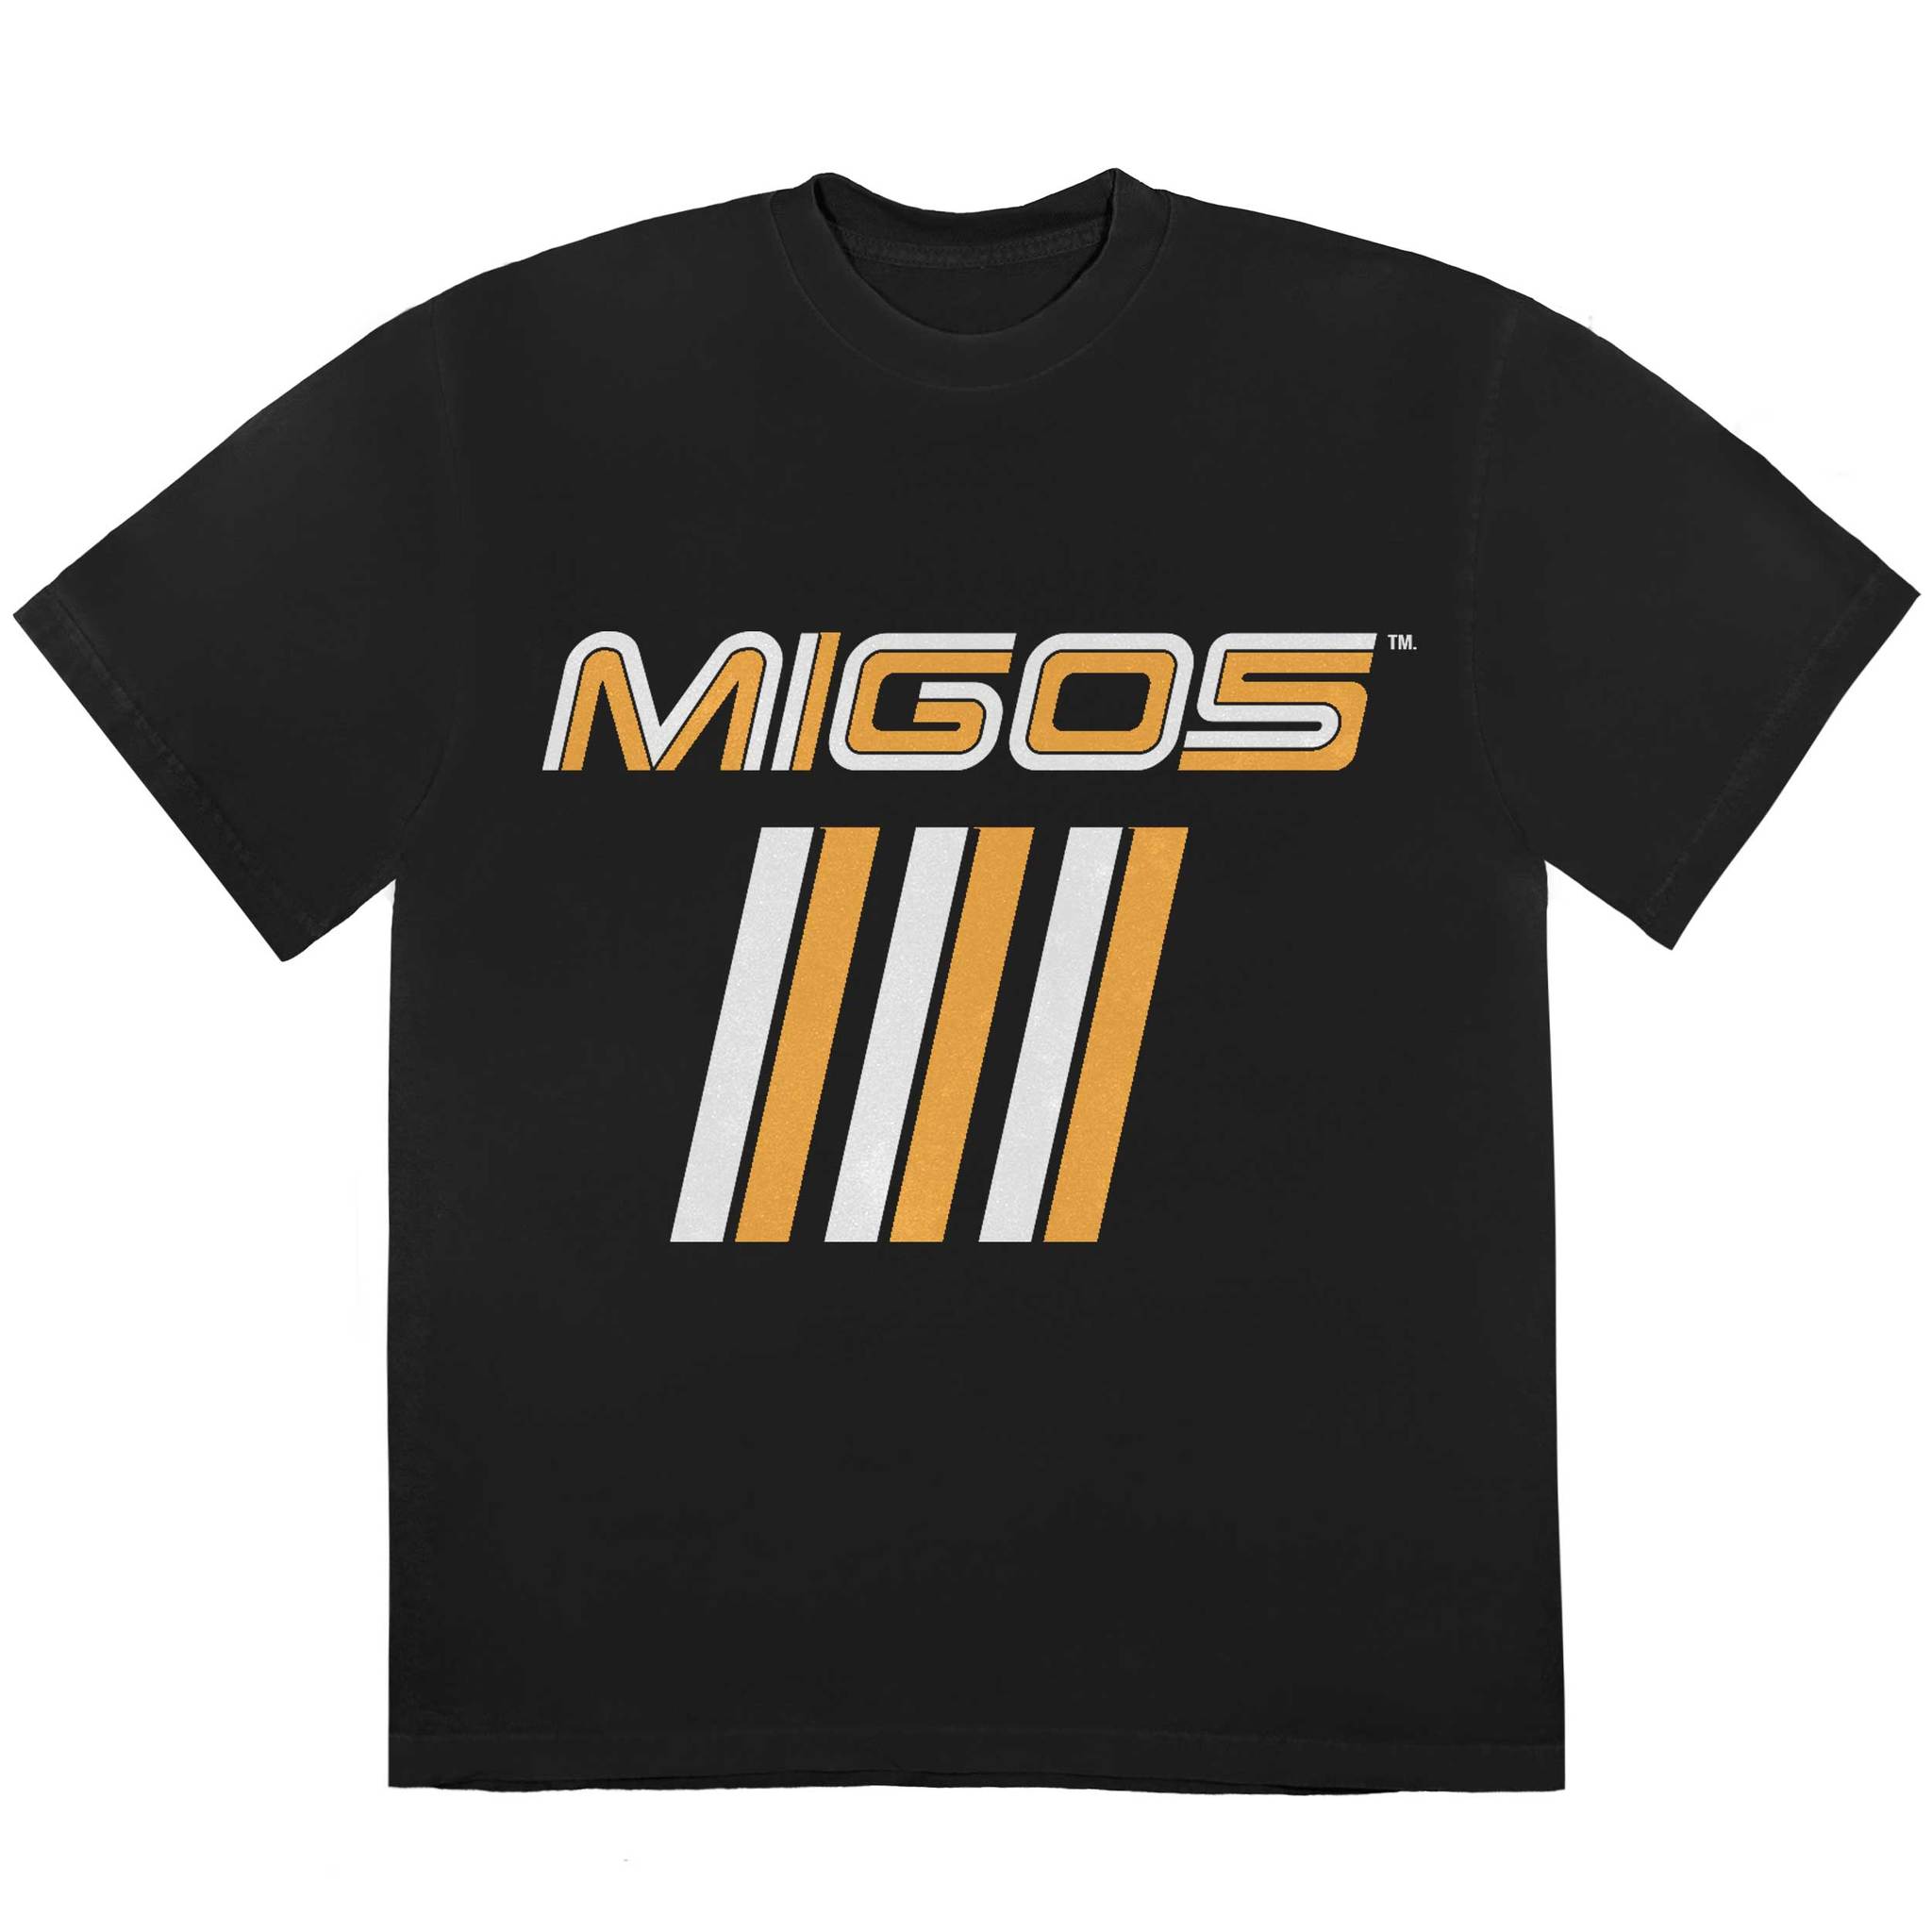 Migos-Release-Culture-III-Merch-Collection-2021-5.jpg